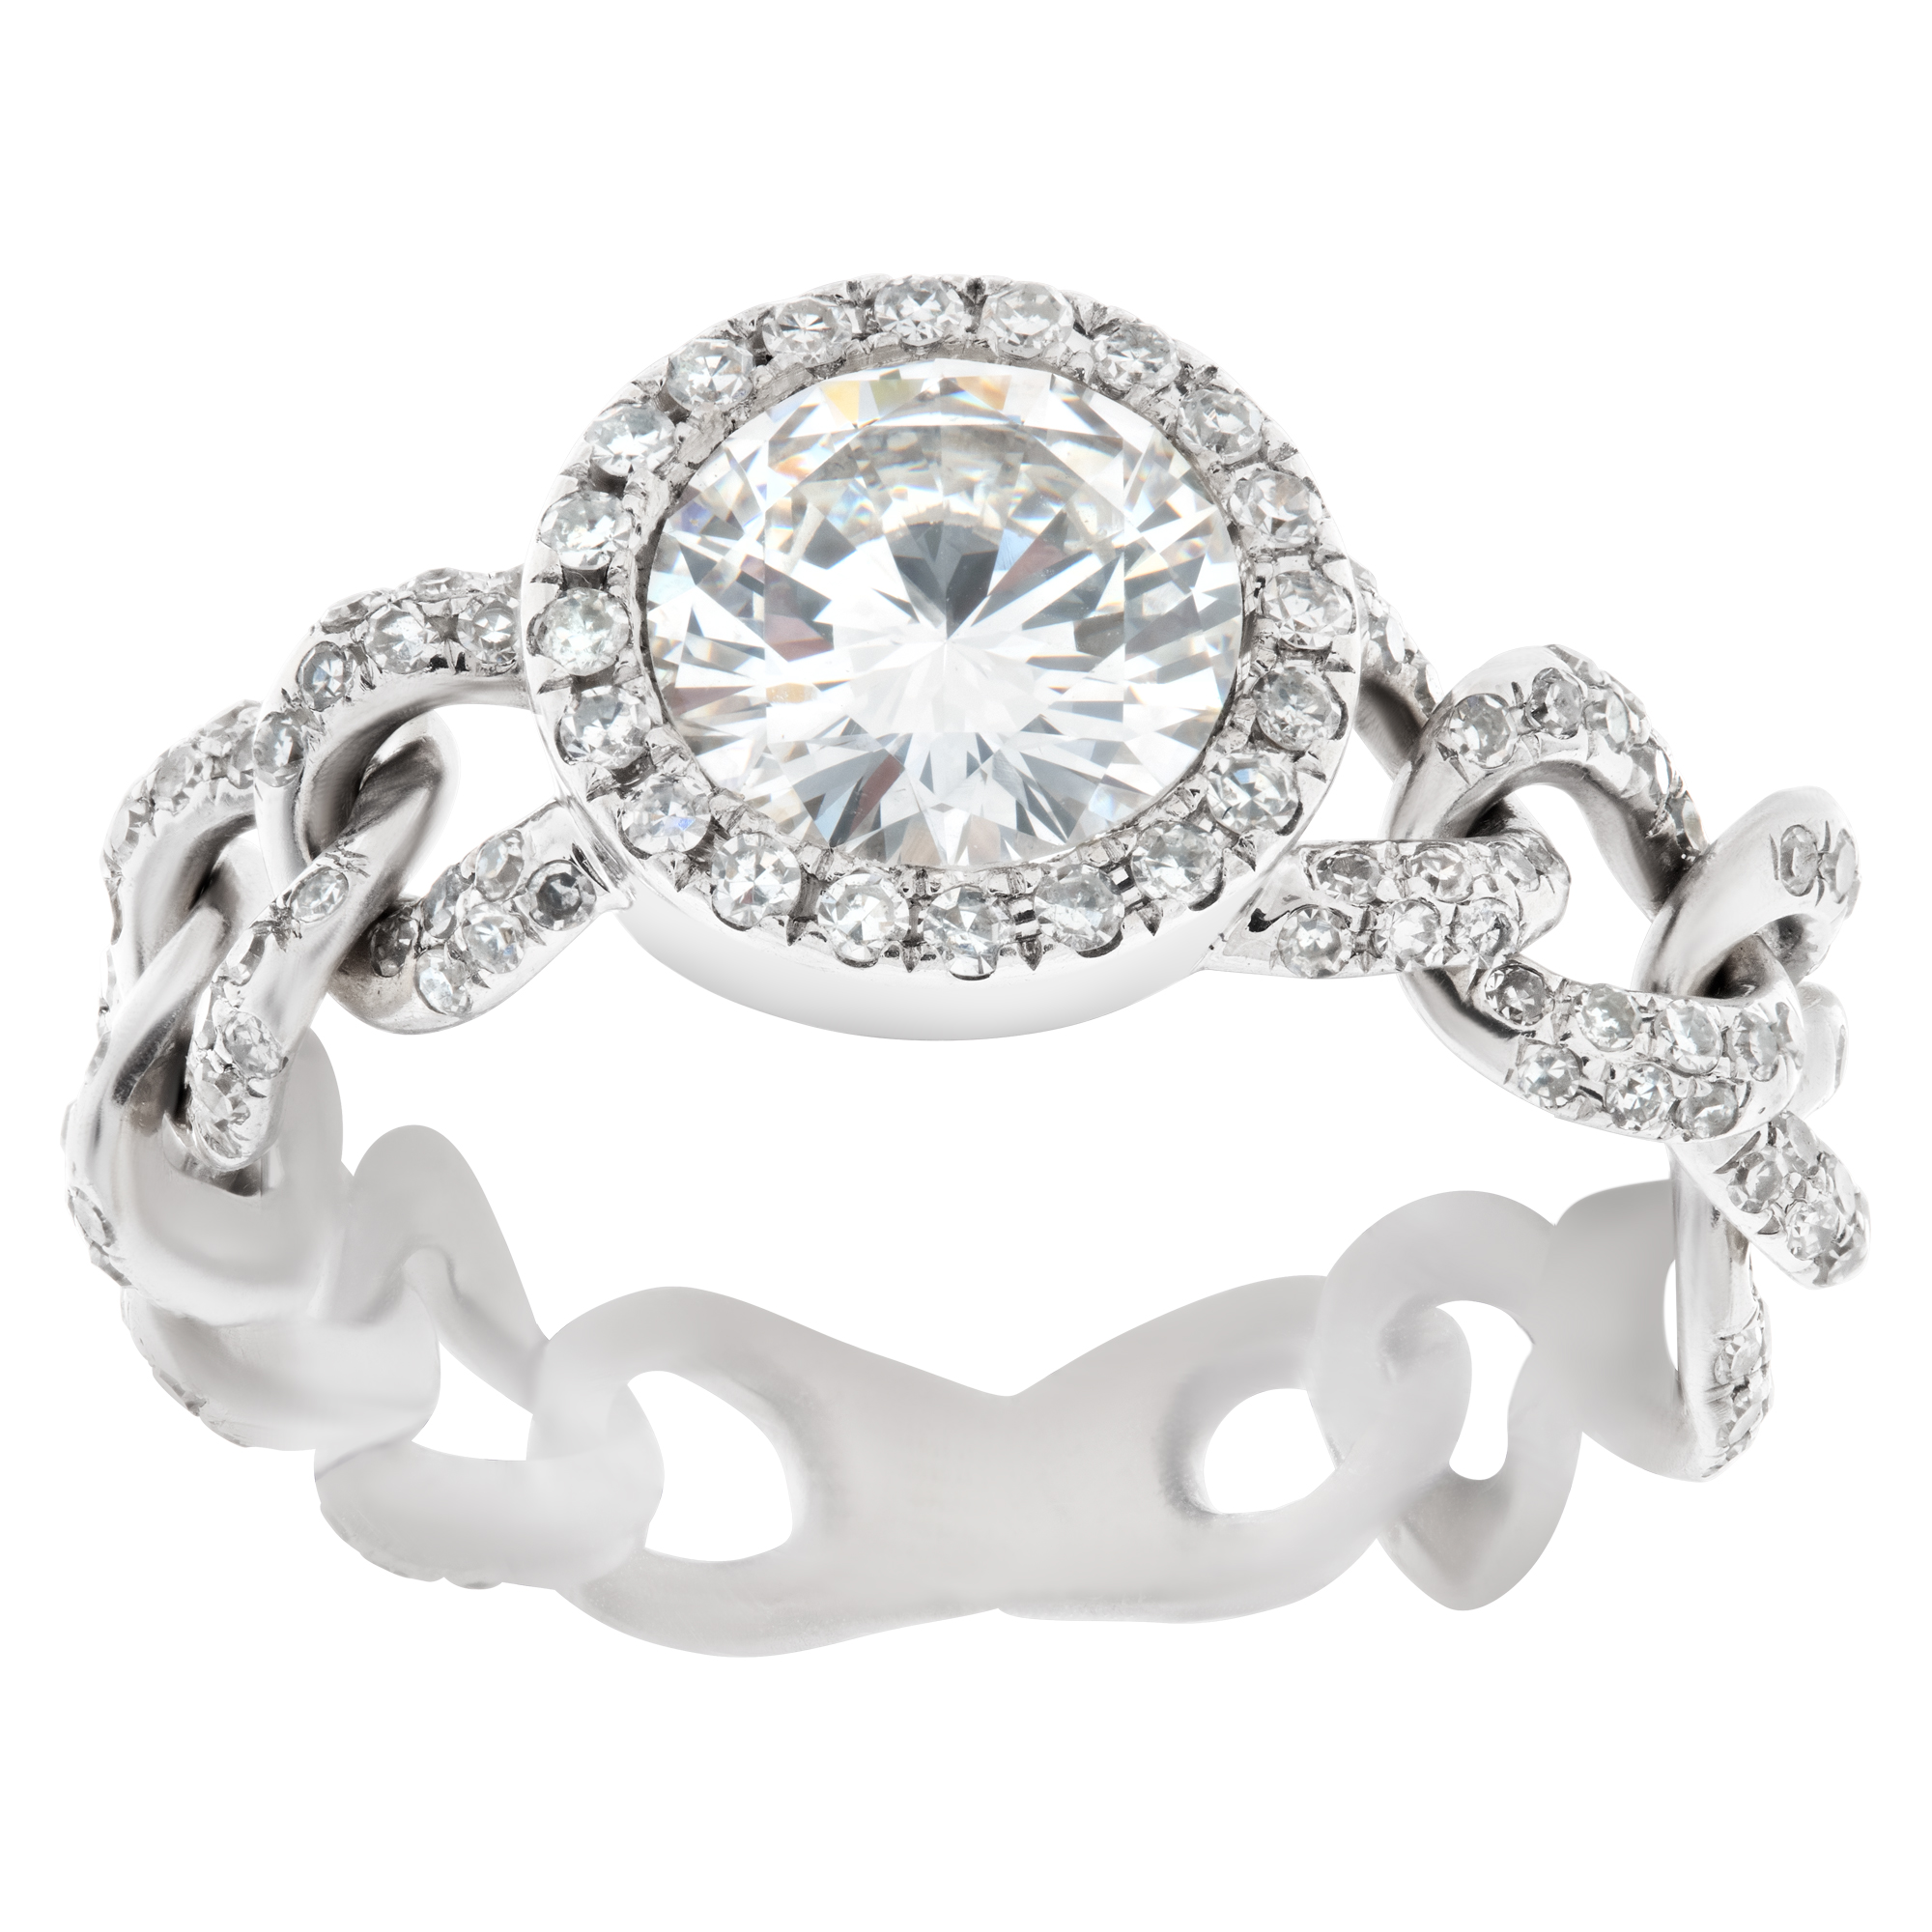 GIA certified round brilliant cut diamond 1.17 carat (E color, VS2 clarity) ring image 1